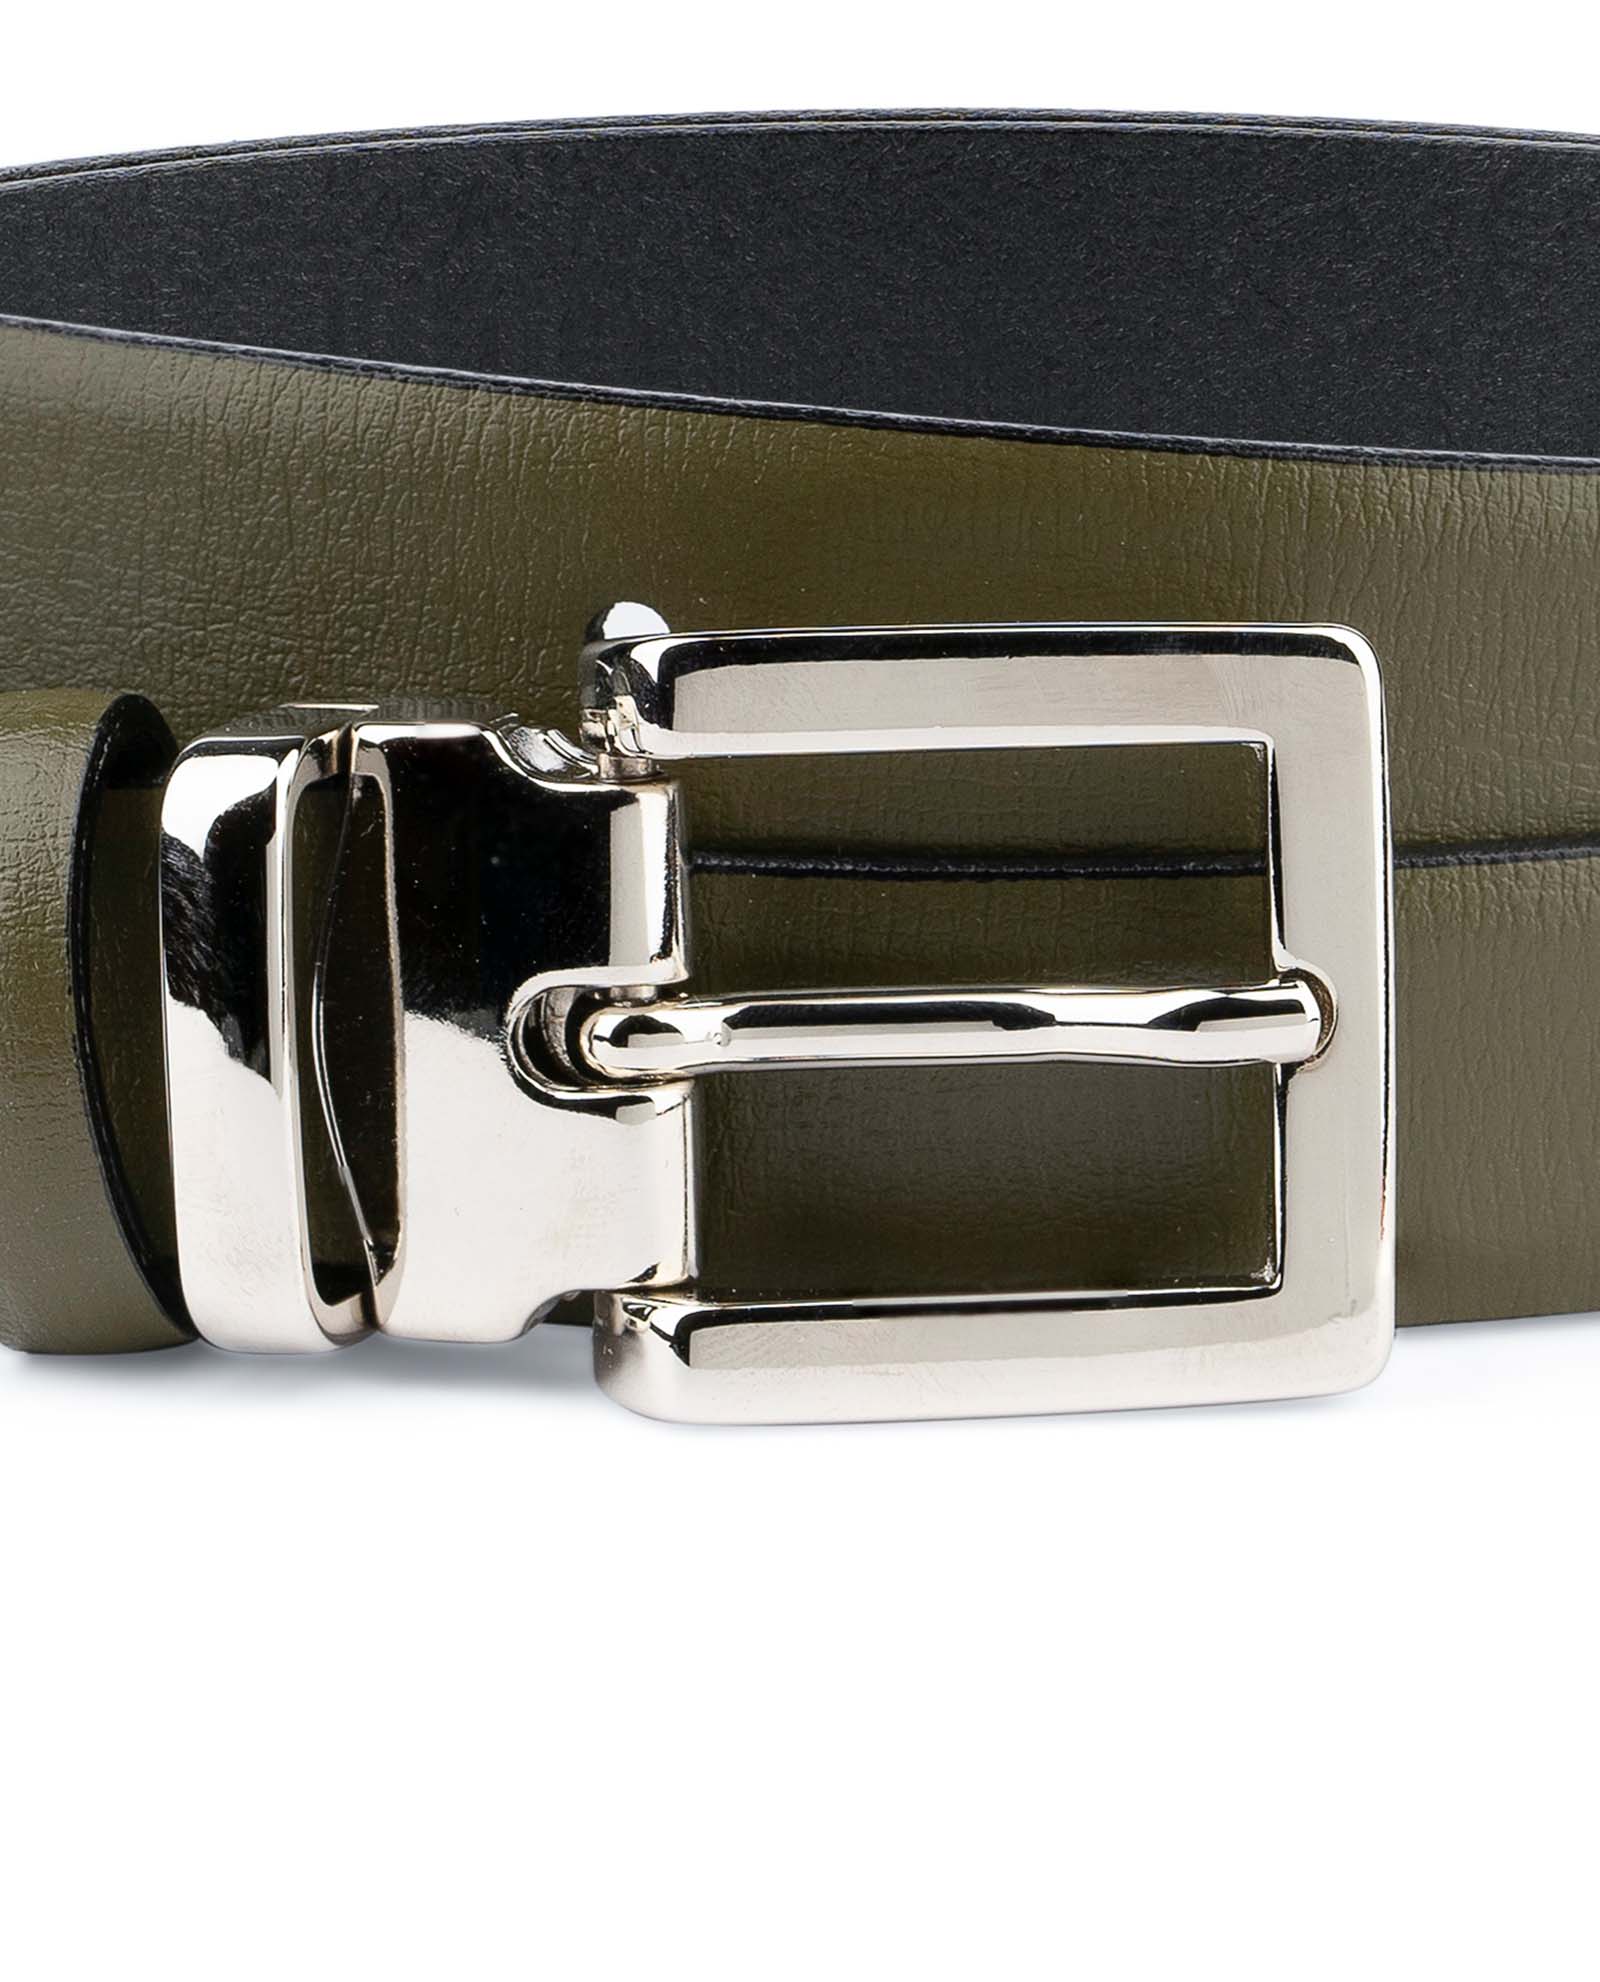 Buy Olive Green Belt For Dresses | Thin 1 inch | Capo Pelle